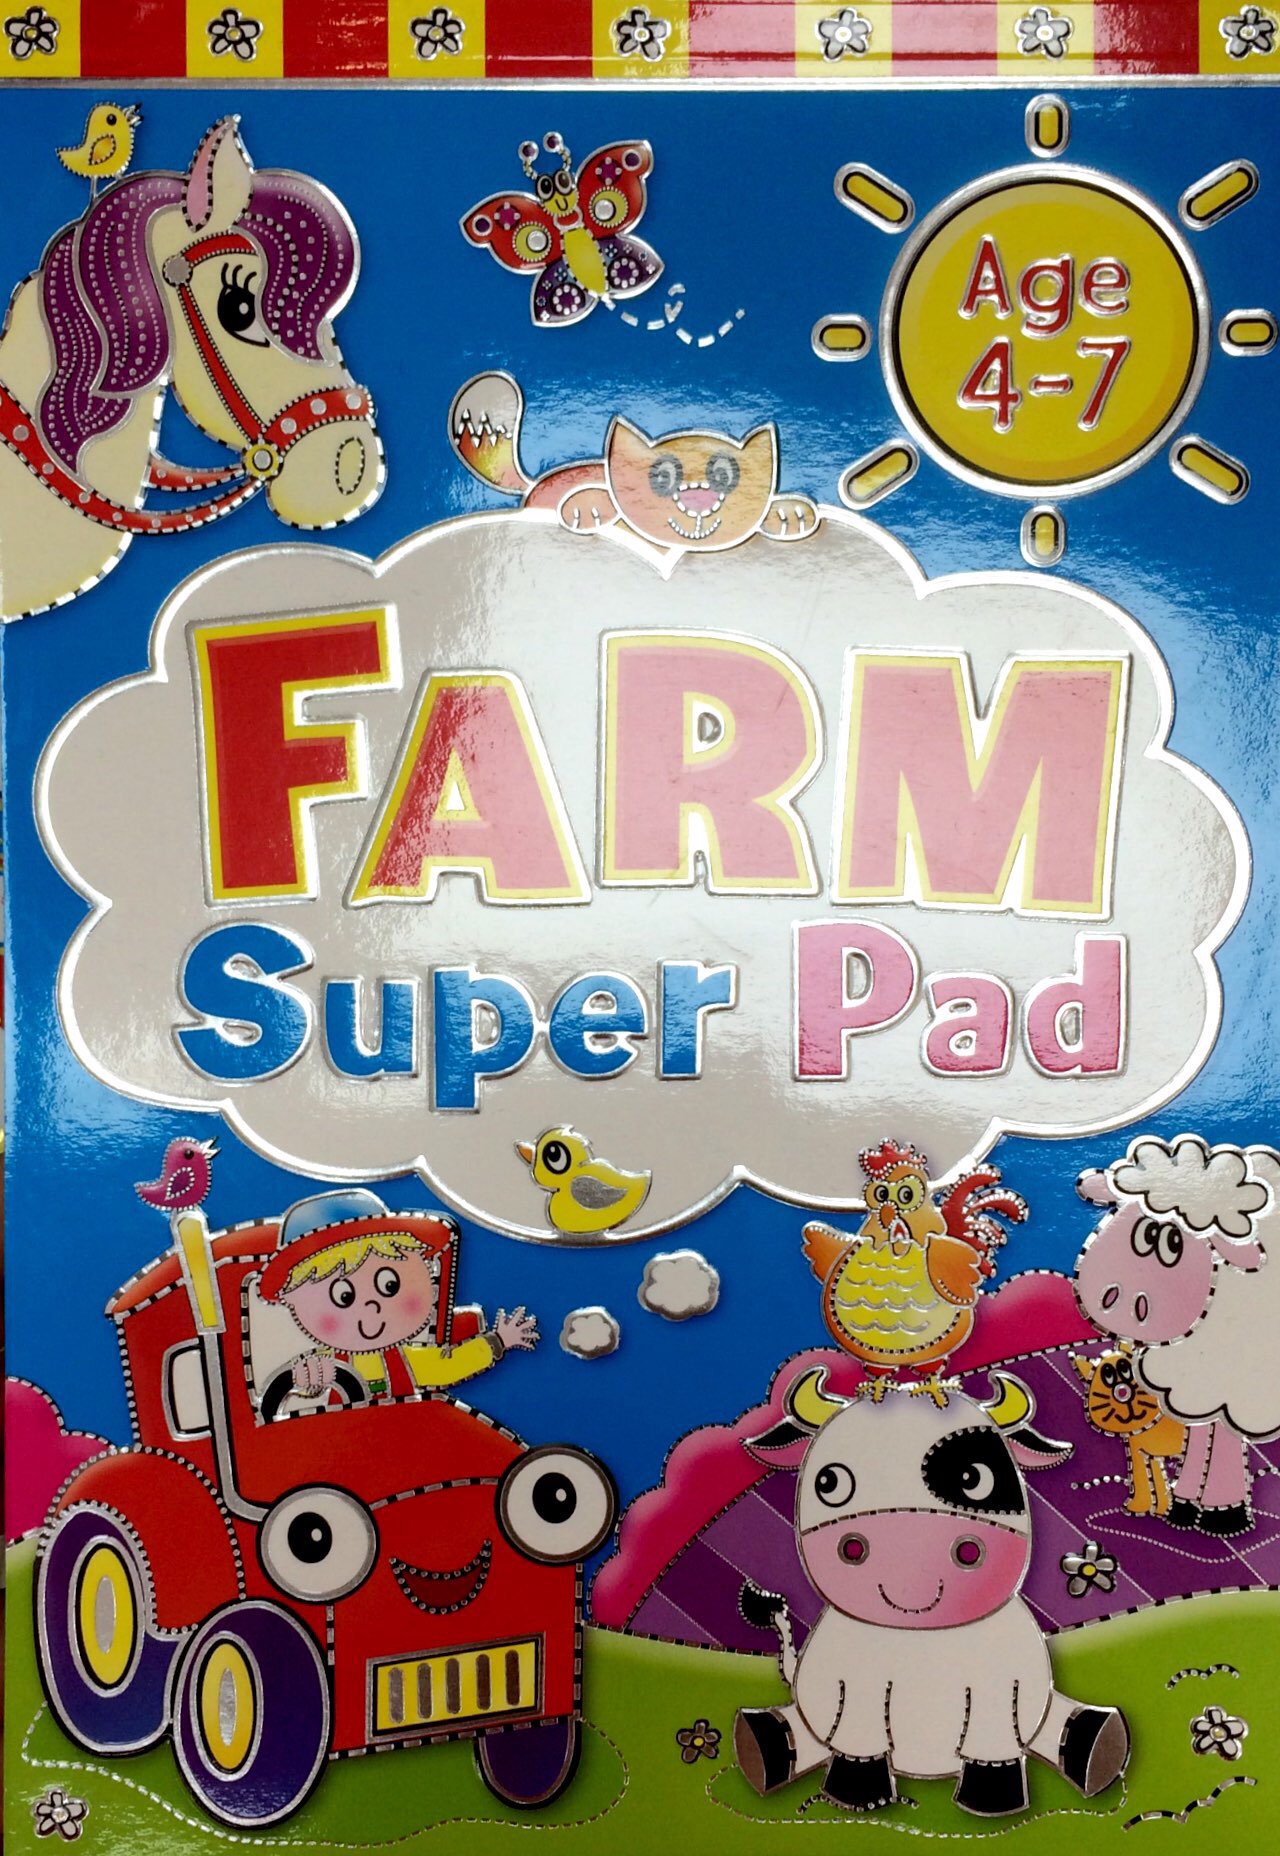 Farm Super Pad